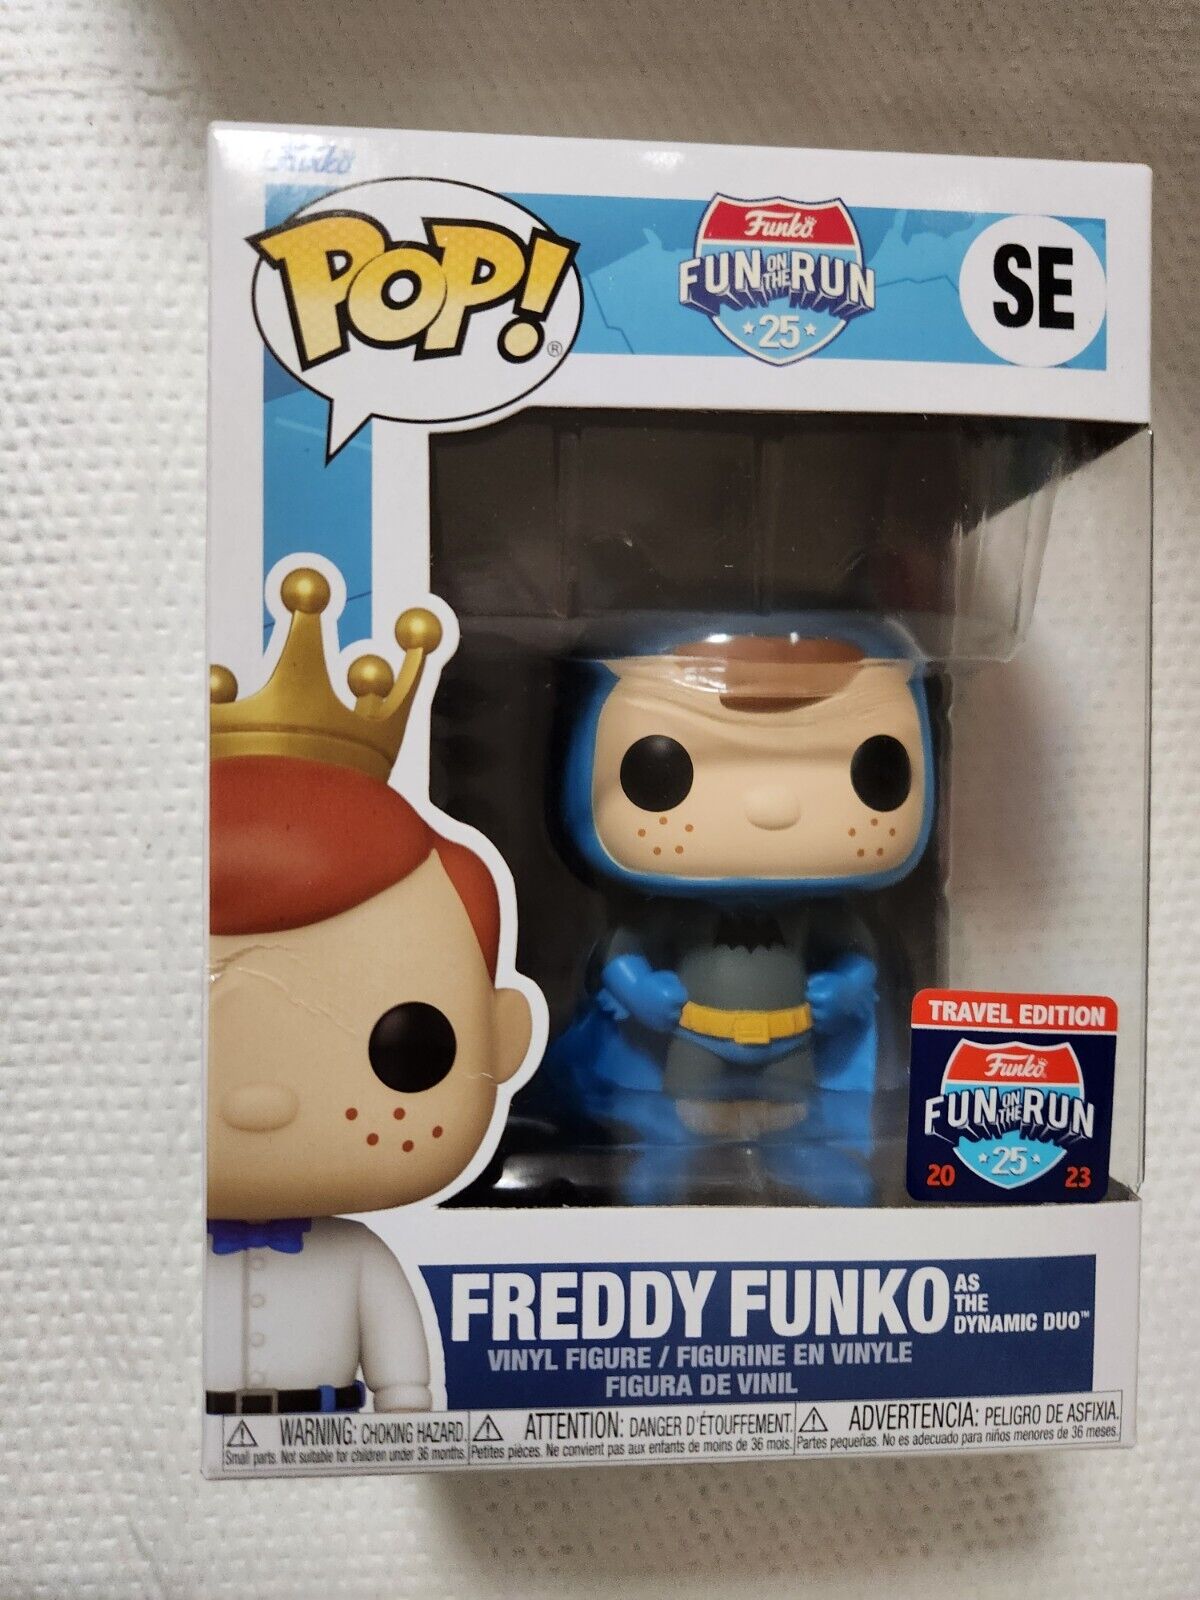 Funko Pop Fun on the Run Freddy Funko as the Dynamic Duo SE Travel Batman